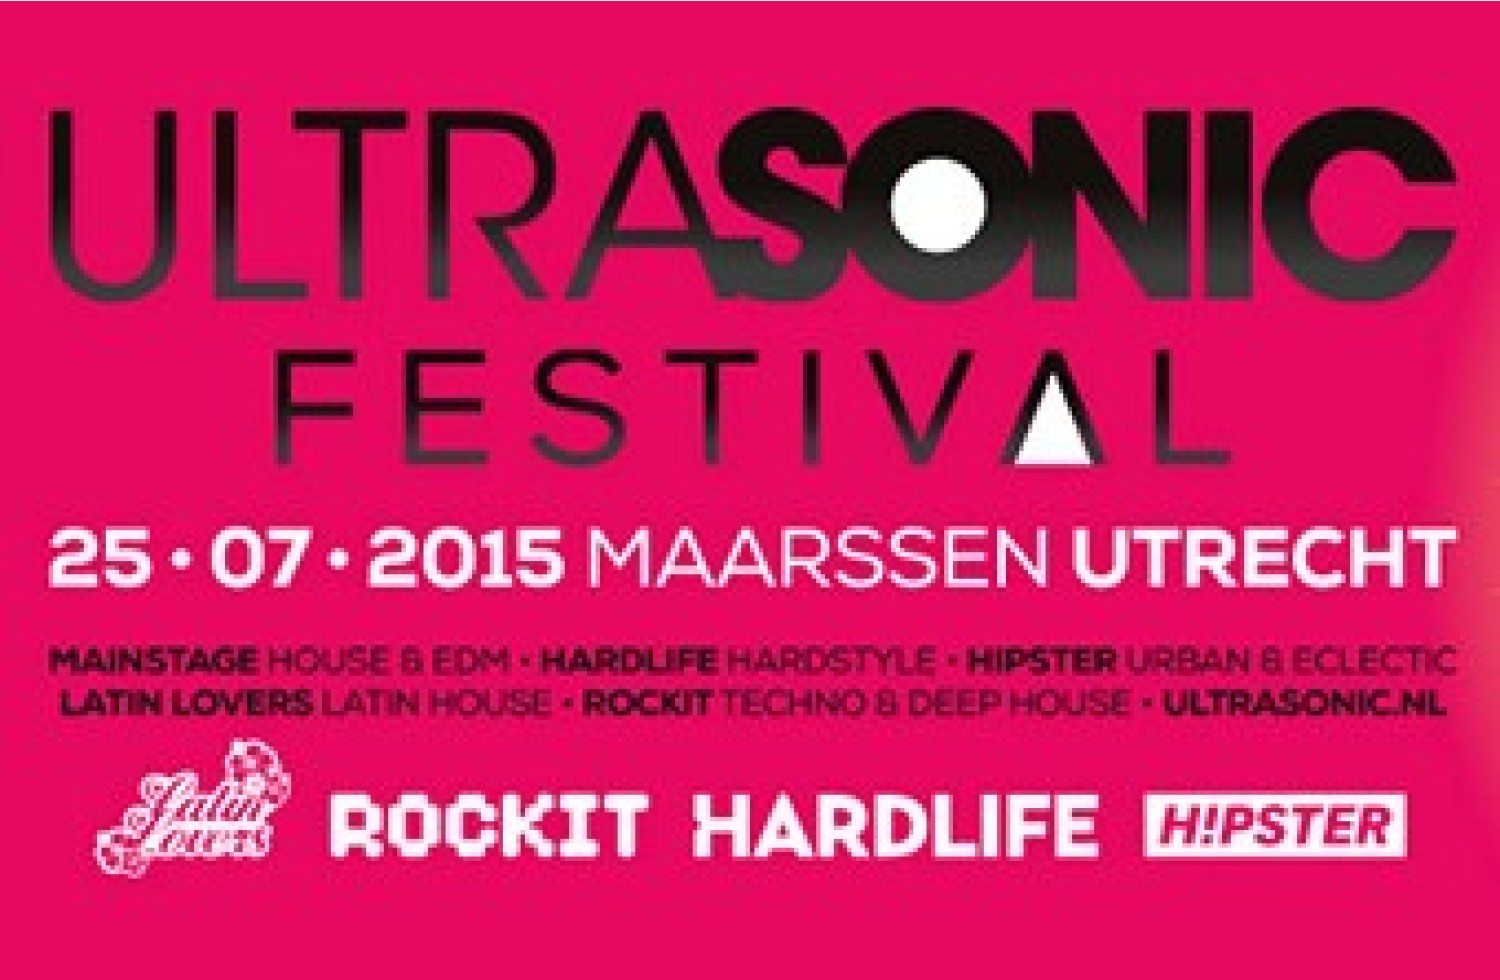 Party nieuws: Ultrasonic Festival maakt je dromen waar